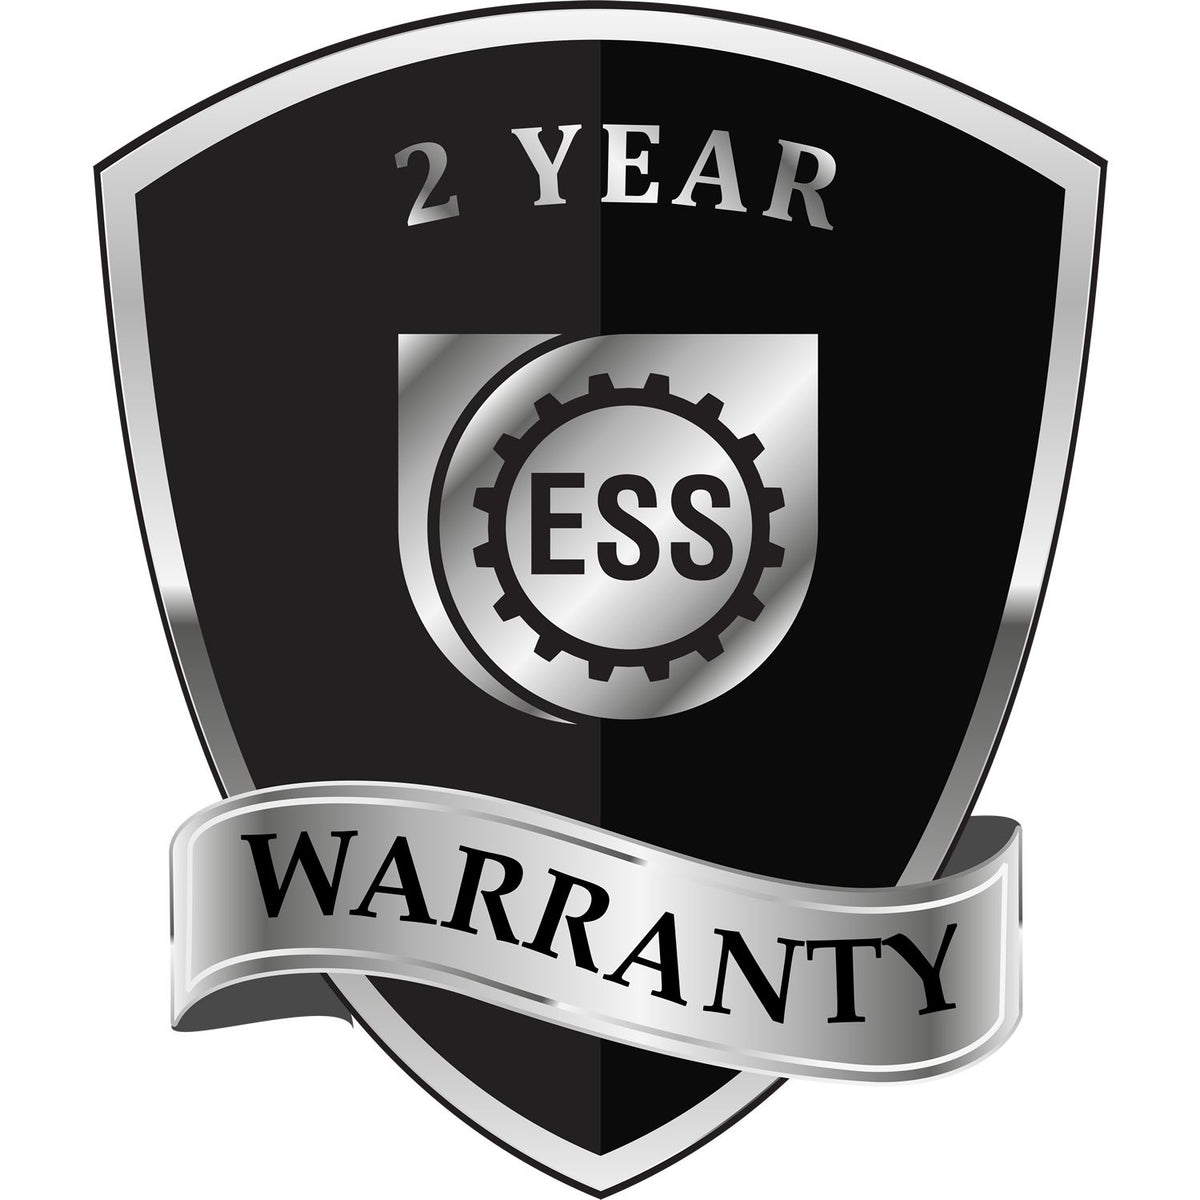 A badge or emblem showing a warranty icon for the Long Reach Louisiana Land Surveyor Seal